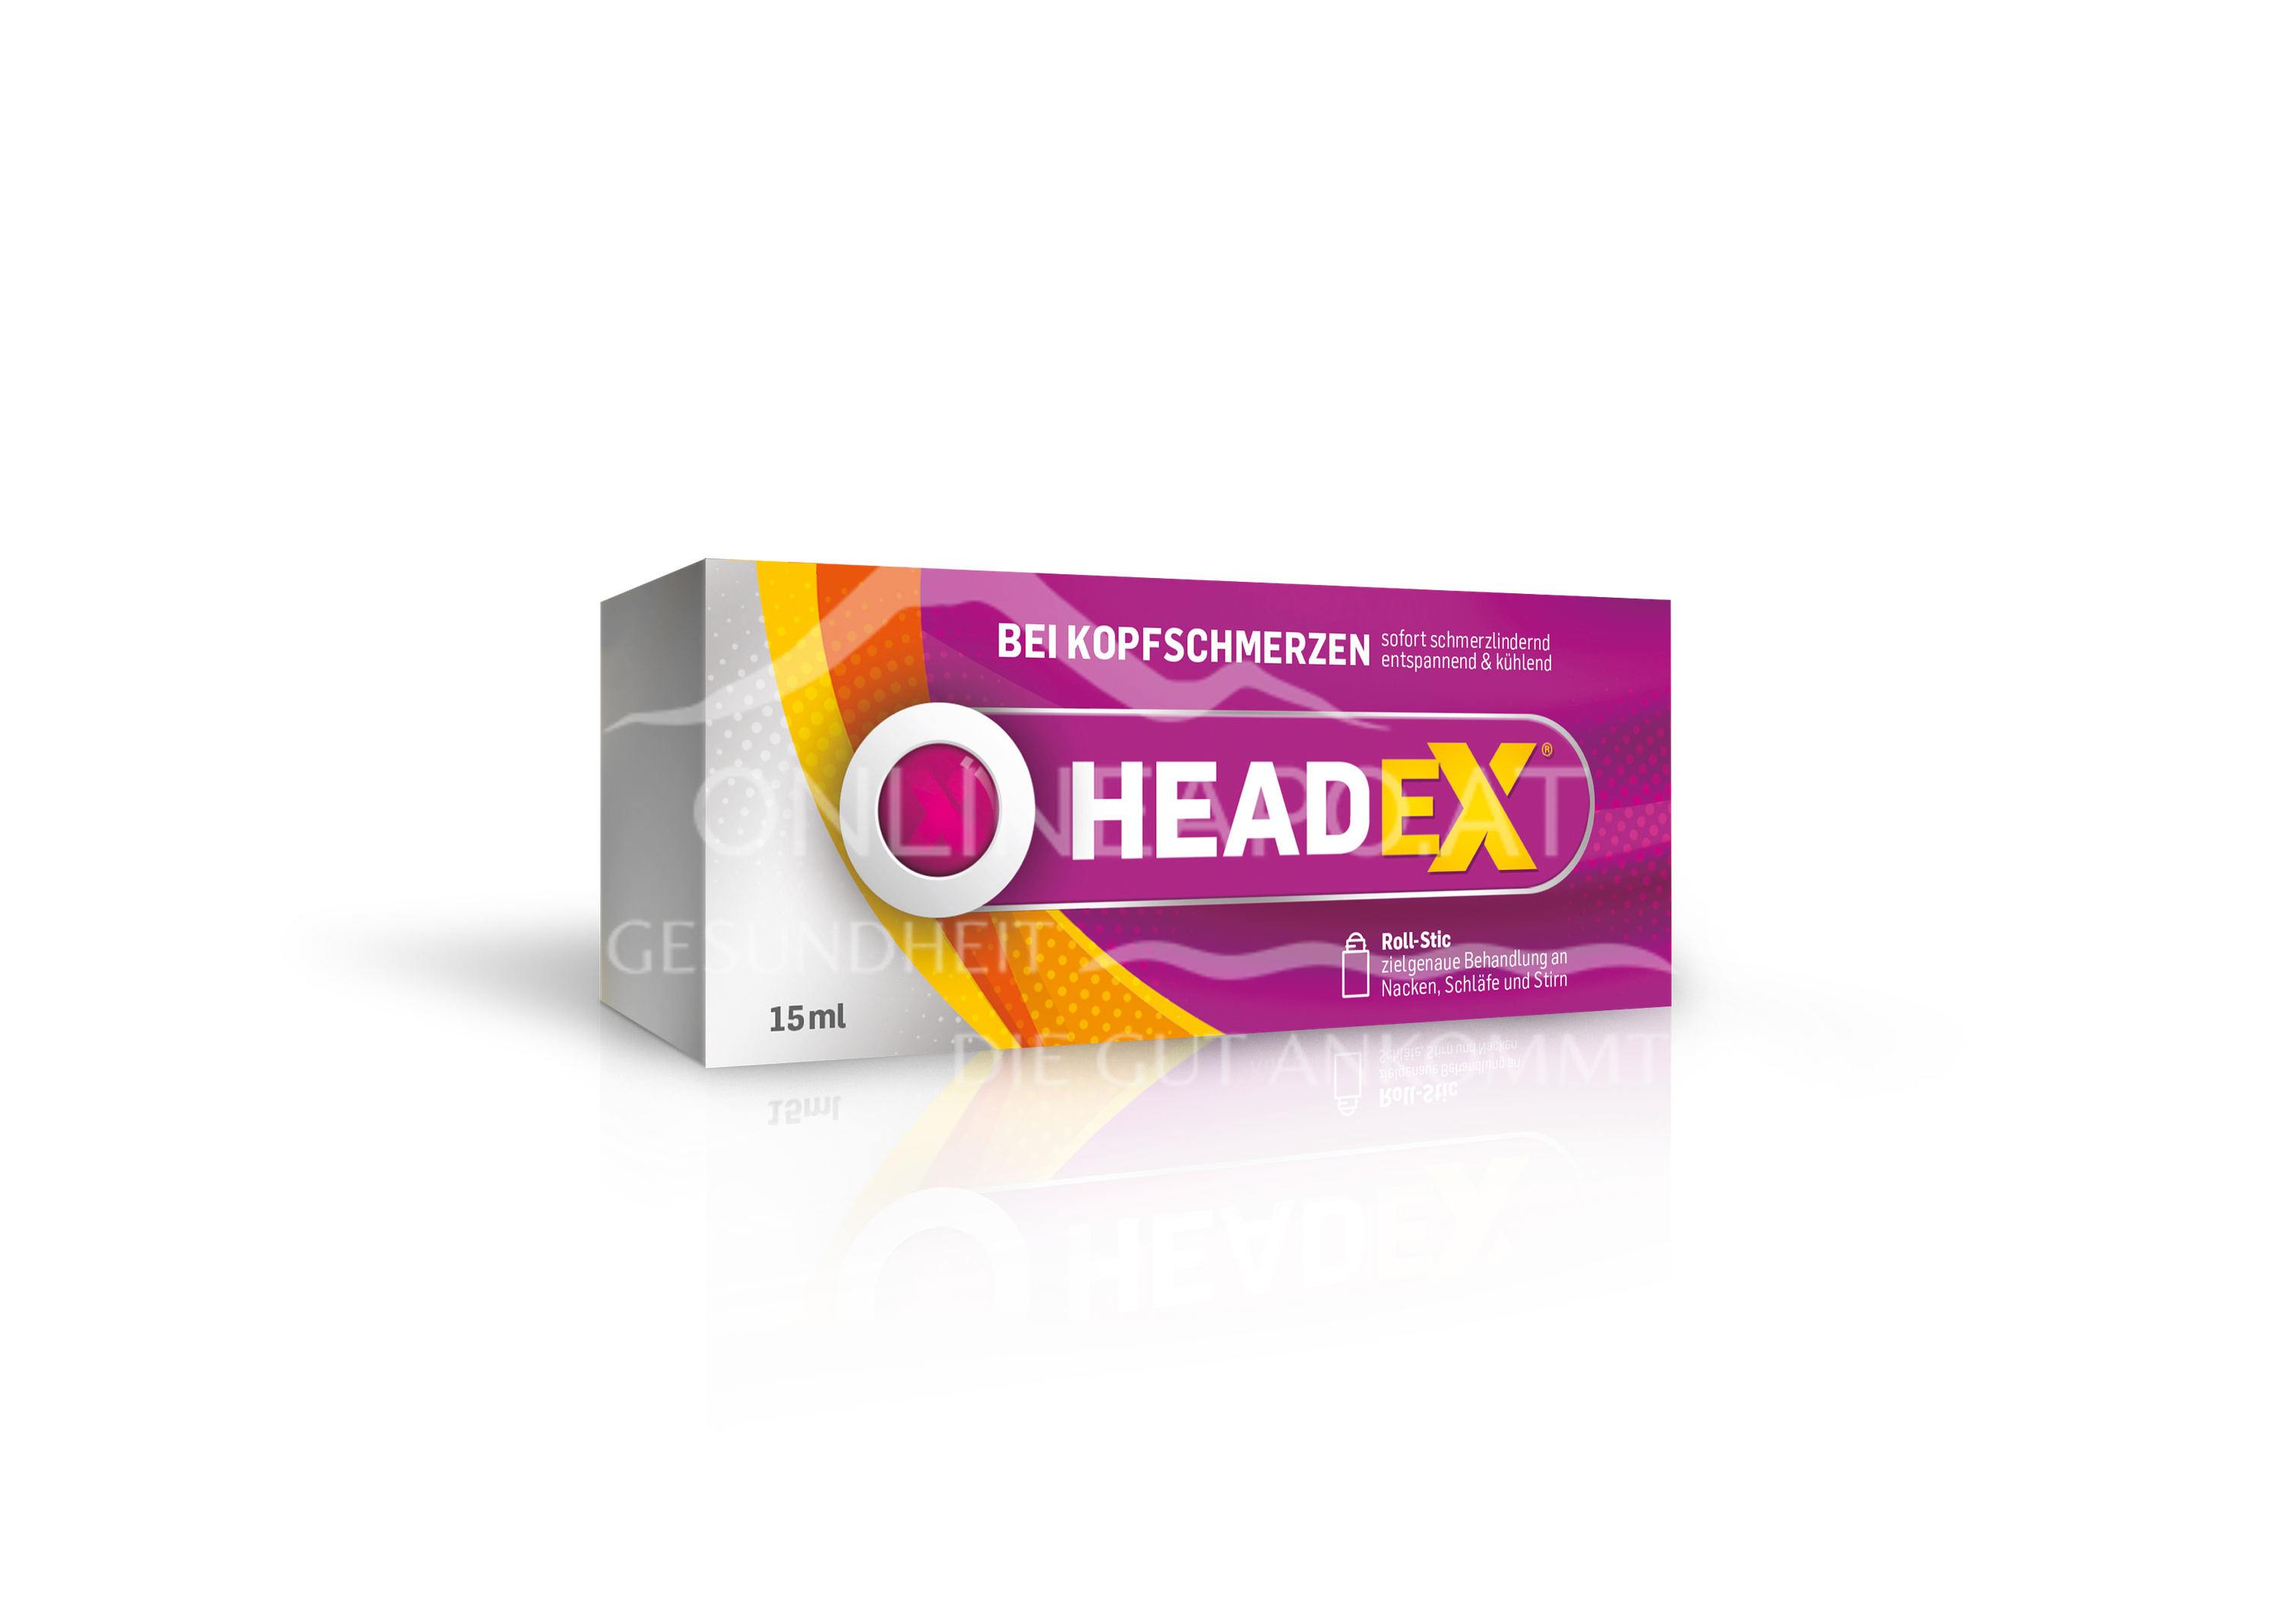 HEADEX® Kopfschmerz Roll-Stic